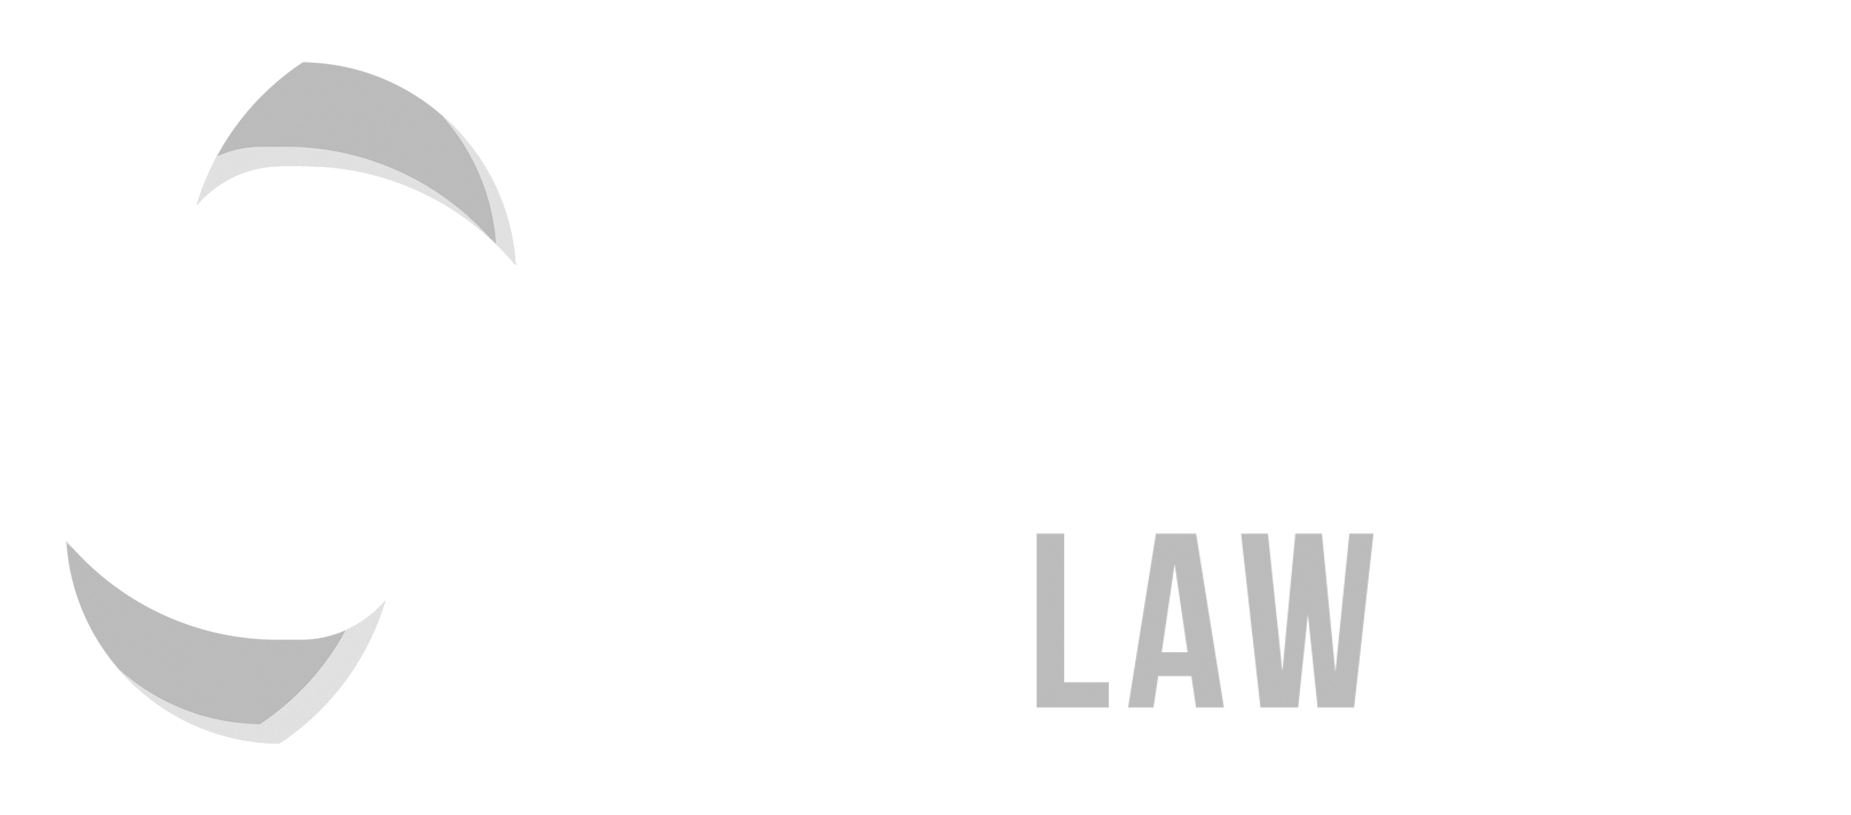 Greg Oakley Law - Attorney - Nashville, TN